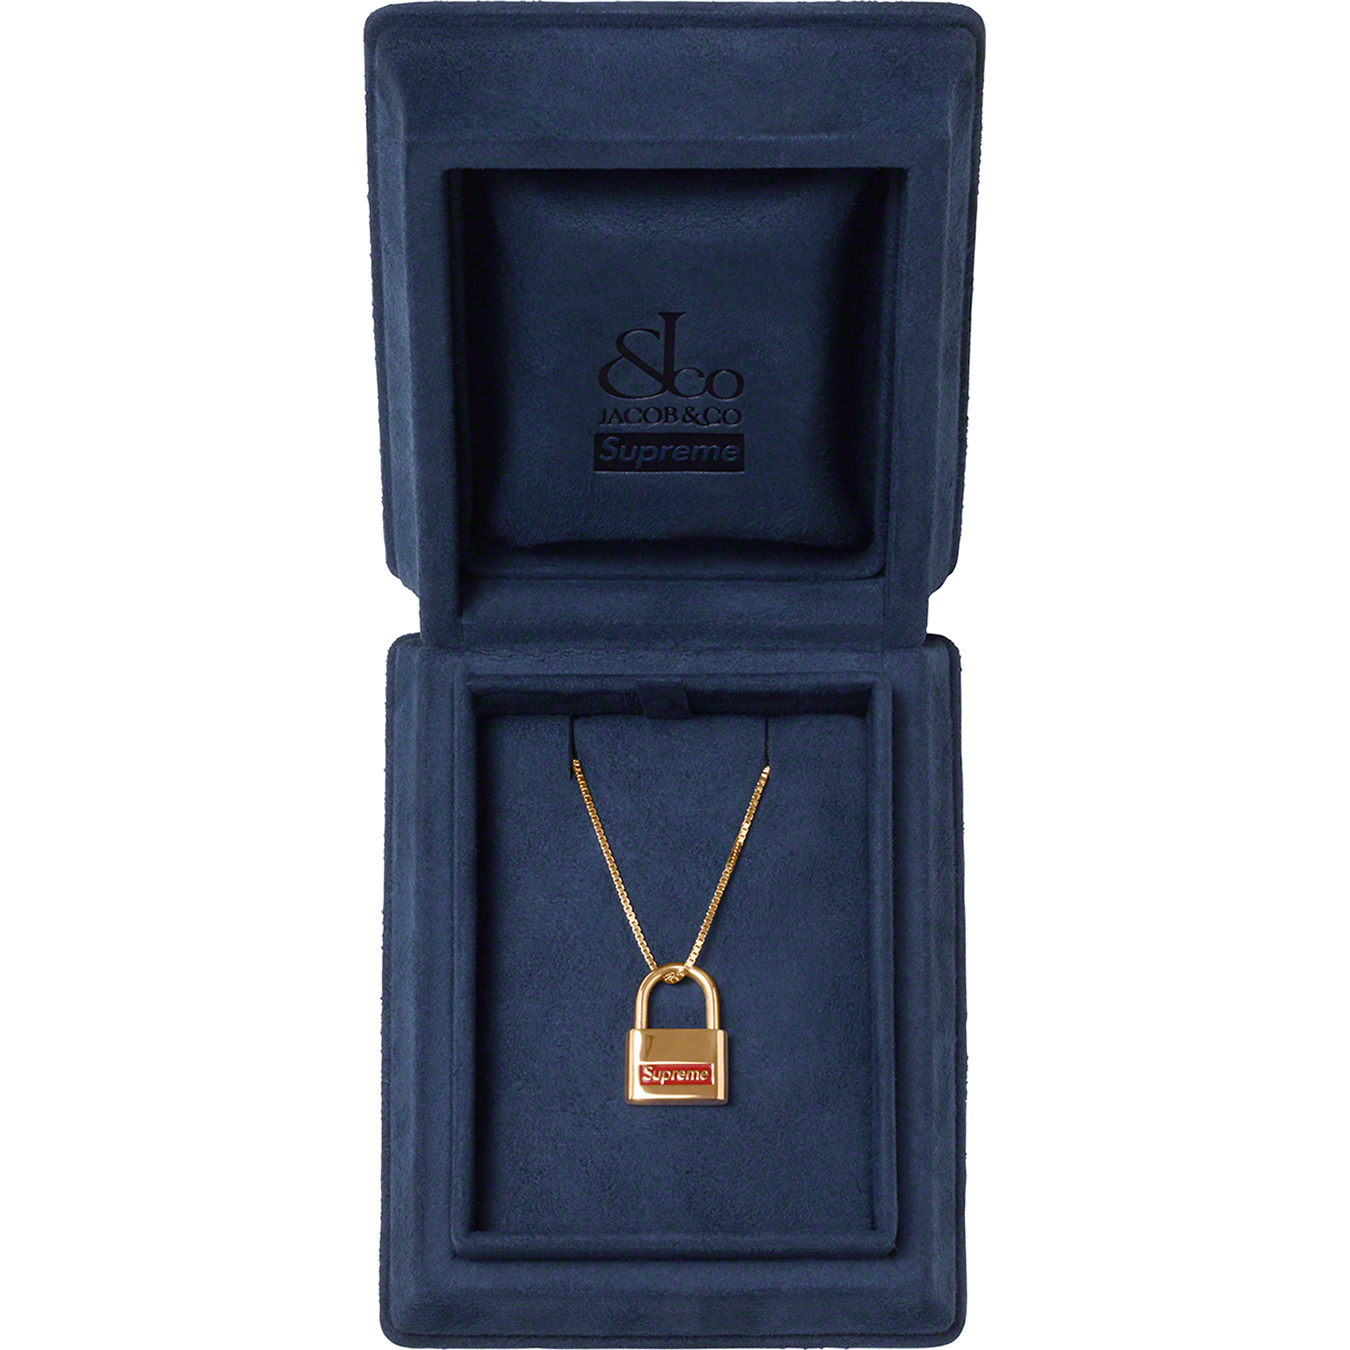 Supreme®/Jacob & Co. 14K Gold Lock Pendant - Supreme Community